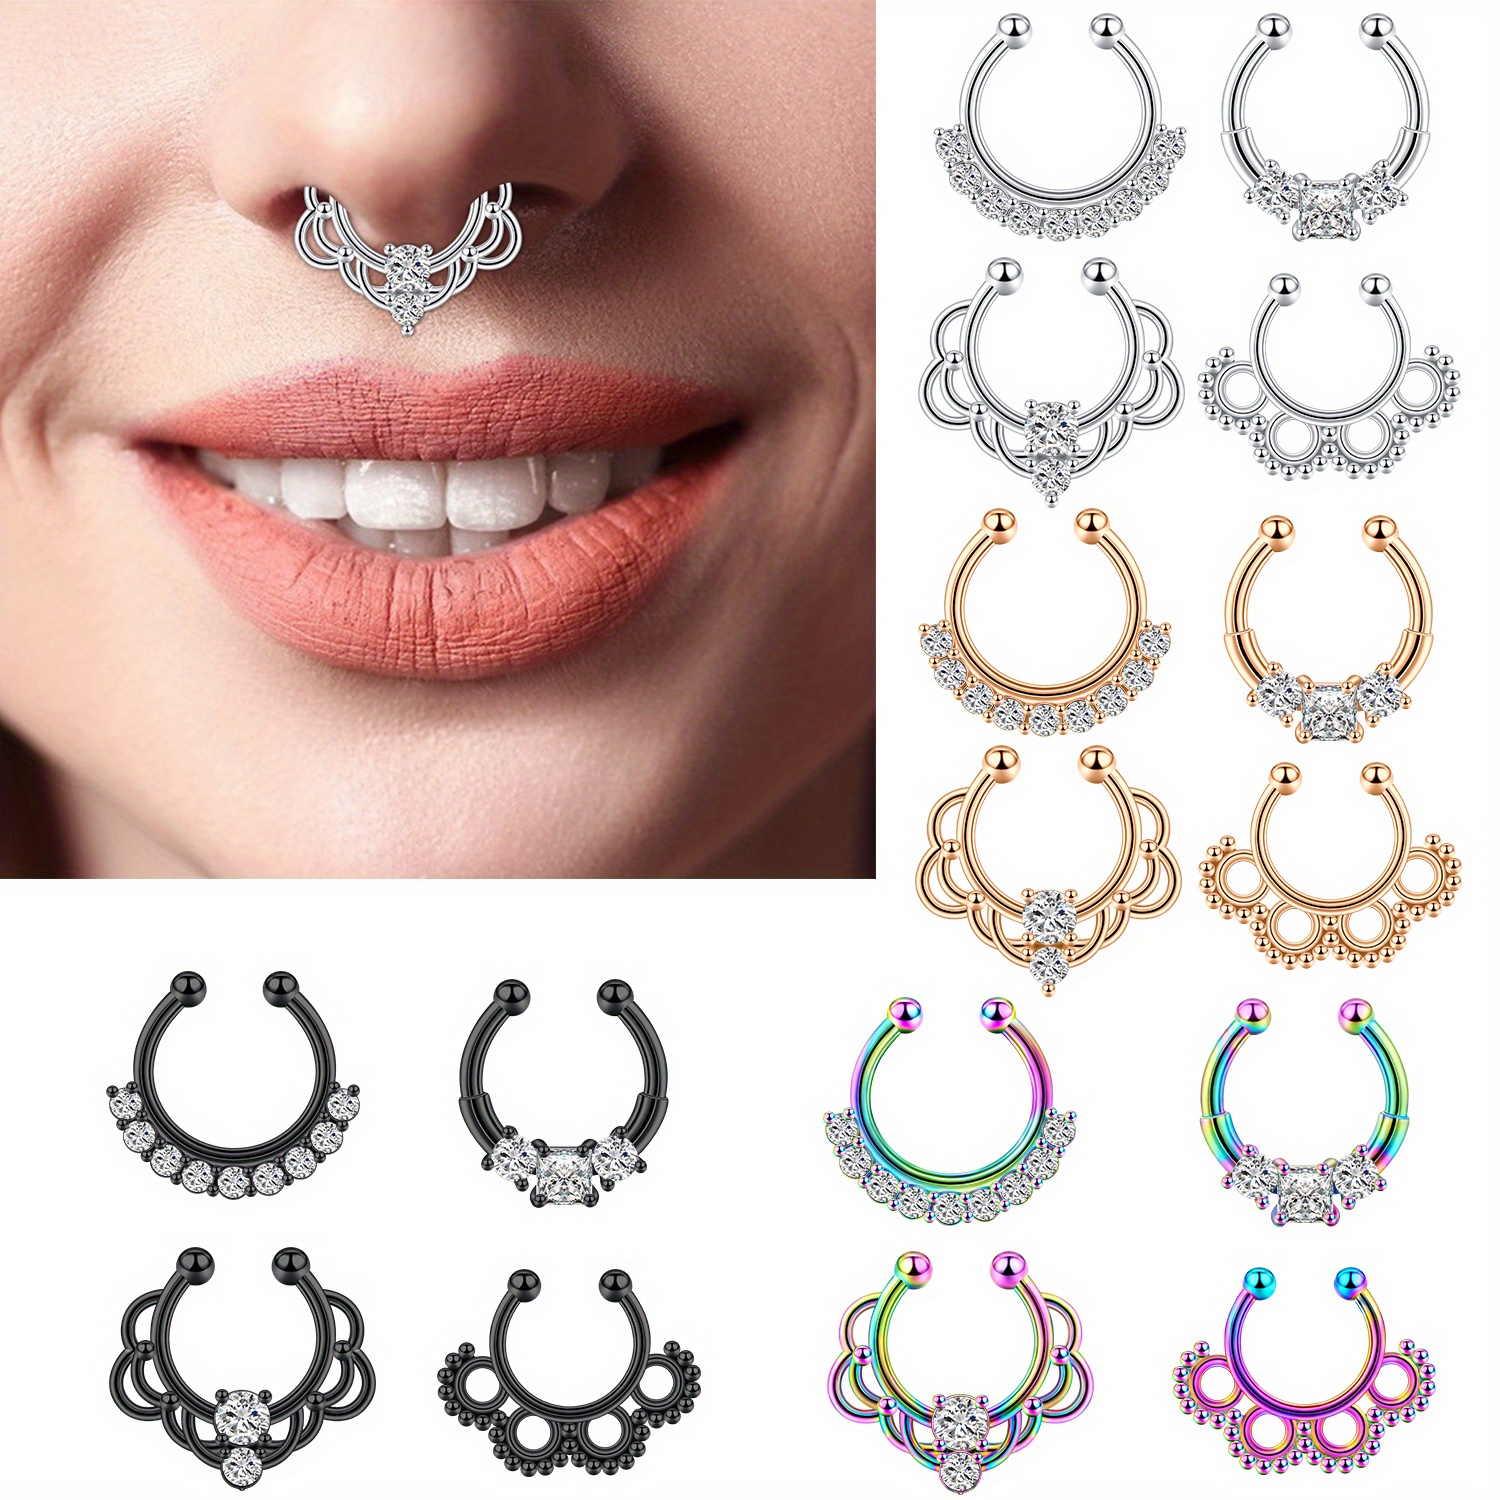 

4pcs Clip On Nose Ring Set Inlaid Shiny Zircon Minimalist Fake Piercing Nose Ring Jewelry